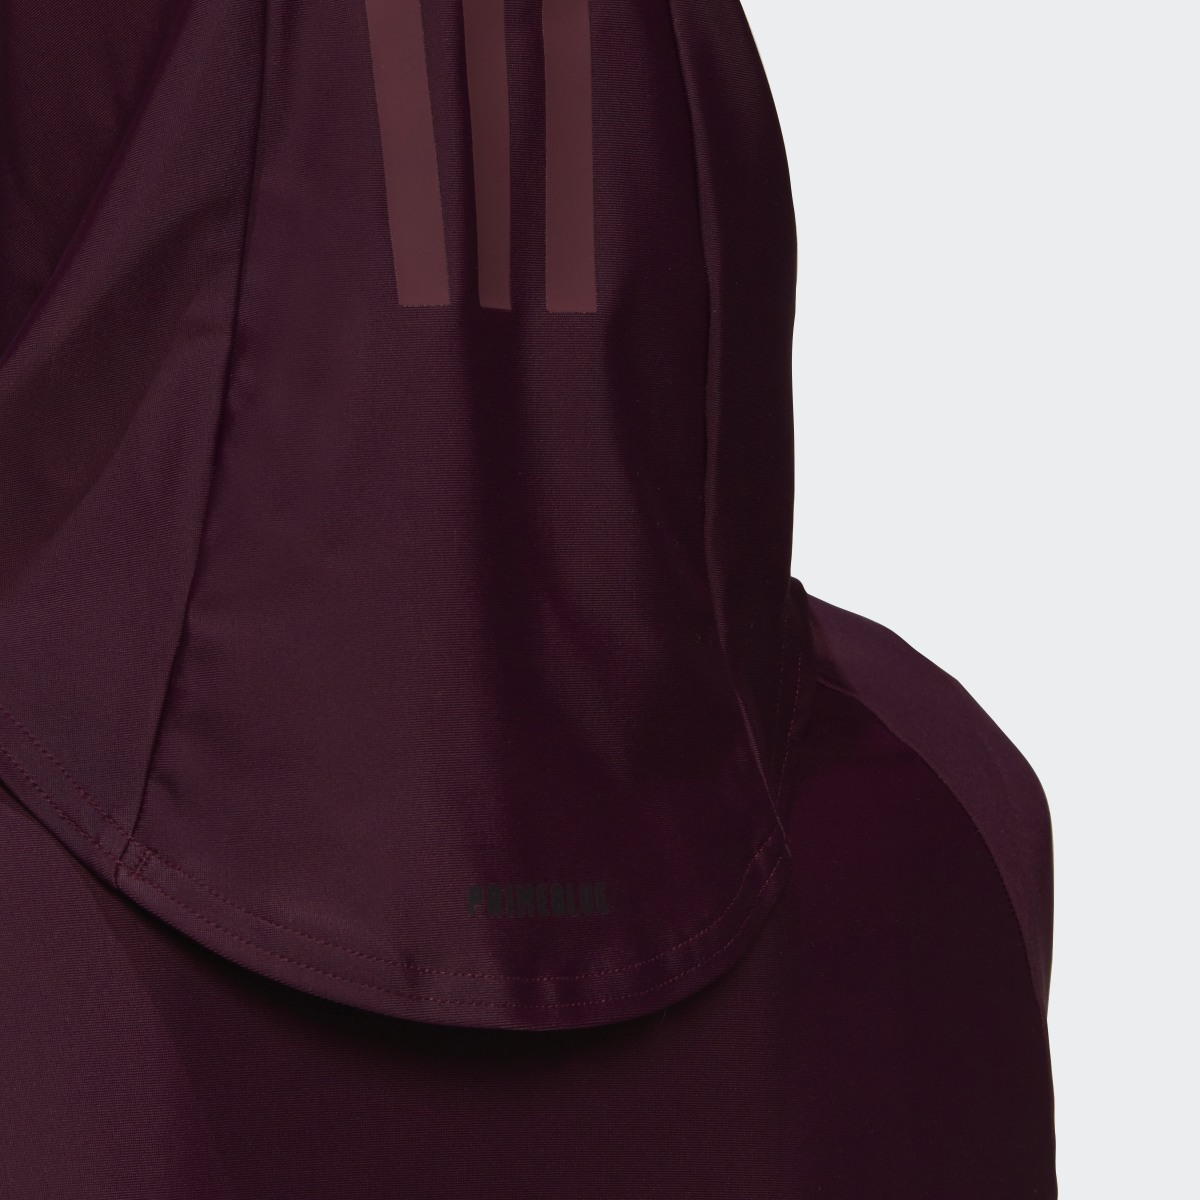 Adidas 3-Stripes Swim Hijab. 8